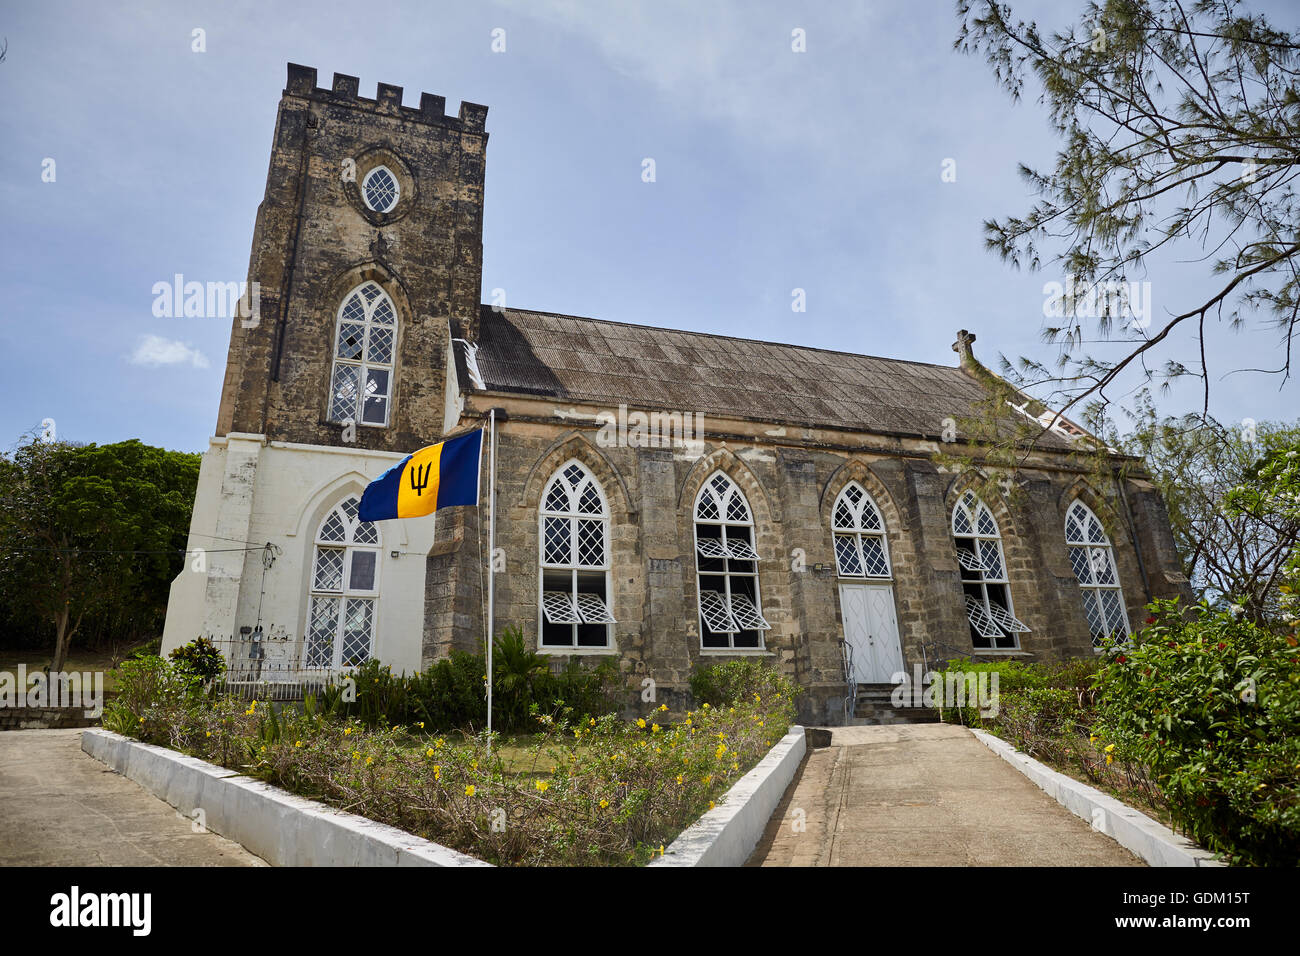 Der kleinen Antillen Barbados Pfarrkirche Sankt Michael Westindien Hauptstadt Bridgetown Barbados Saint Andrew Kirche Schottlands Distr Stockfoto